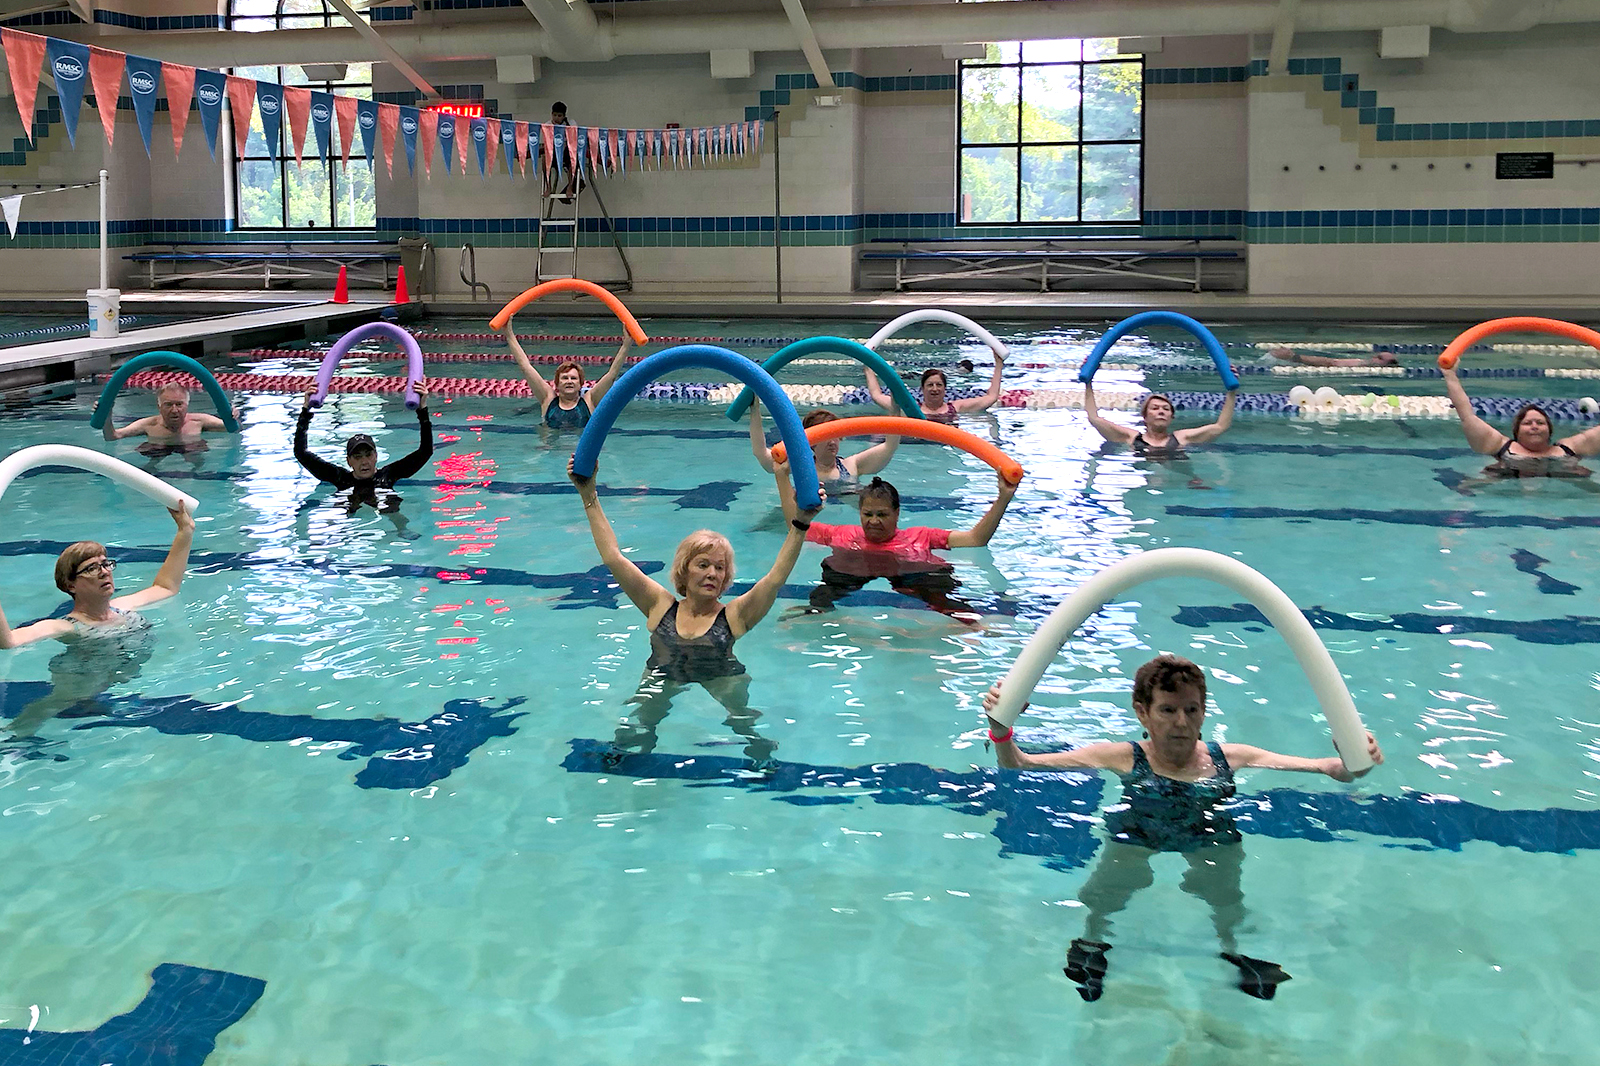 water aerobics classes for seniors near me > OFF56